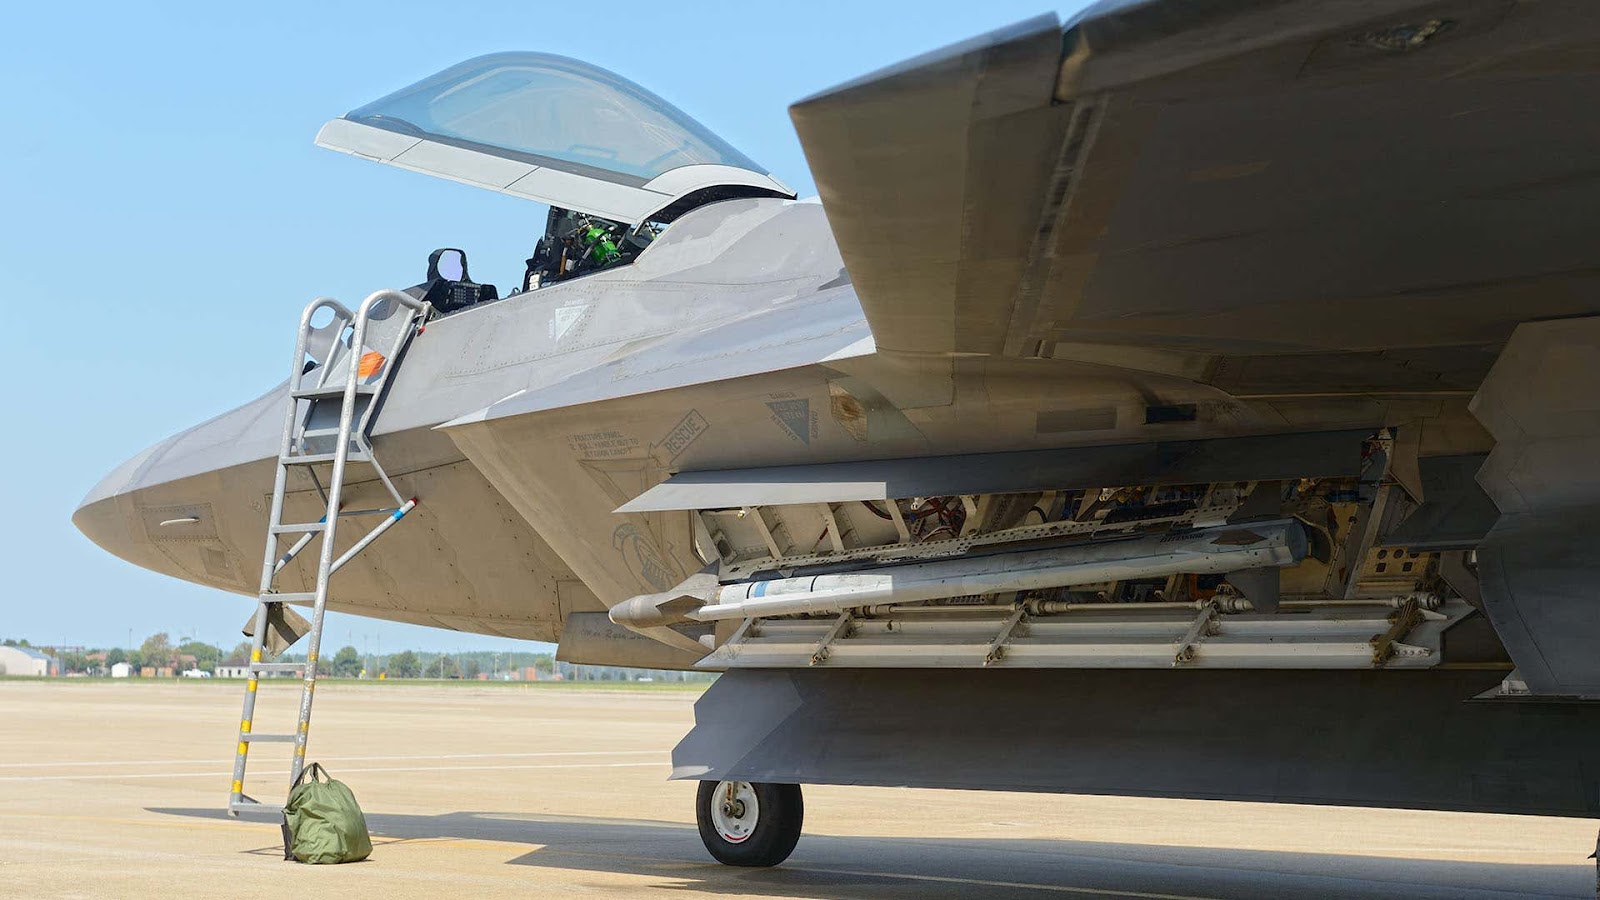 F-22에 장착된 AIM-9X. Sidewinder 레일은 또한 잠재적인 IRST pod 장착 위치가 될 수 있다.